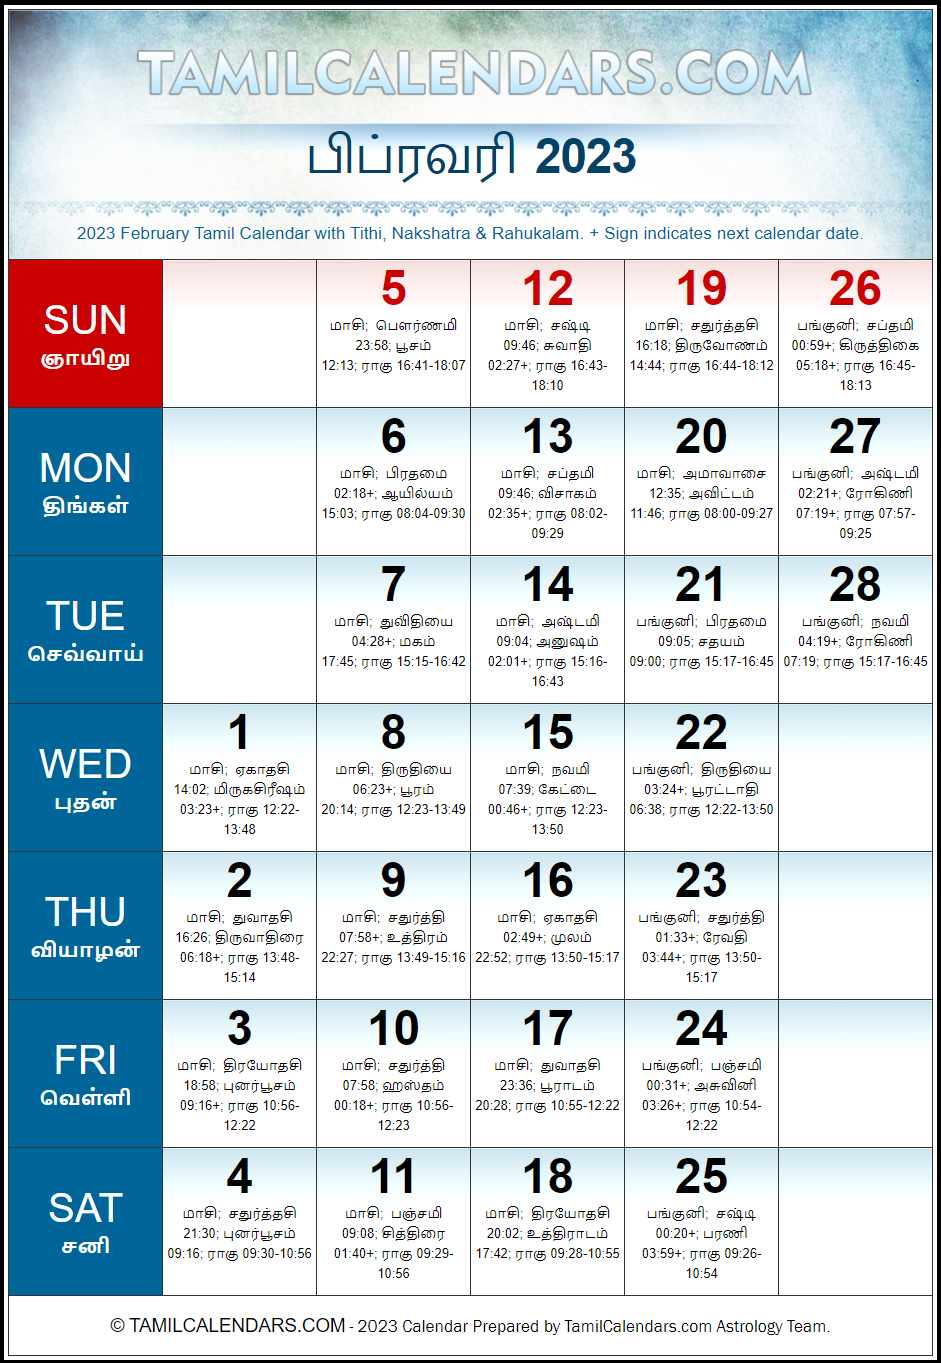 February 2023 Tamil Calendar